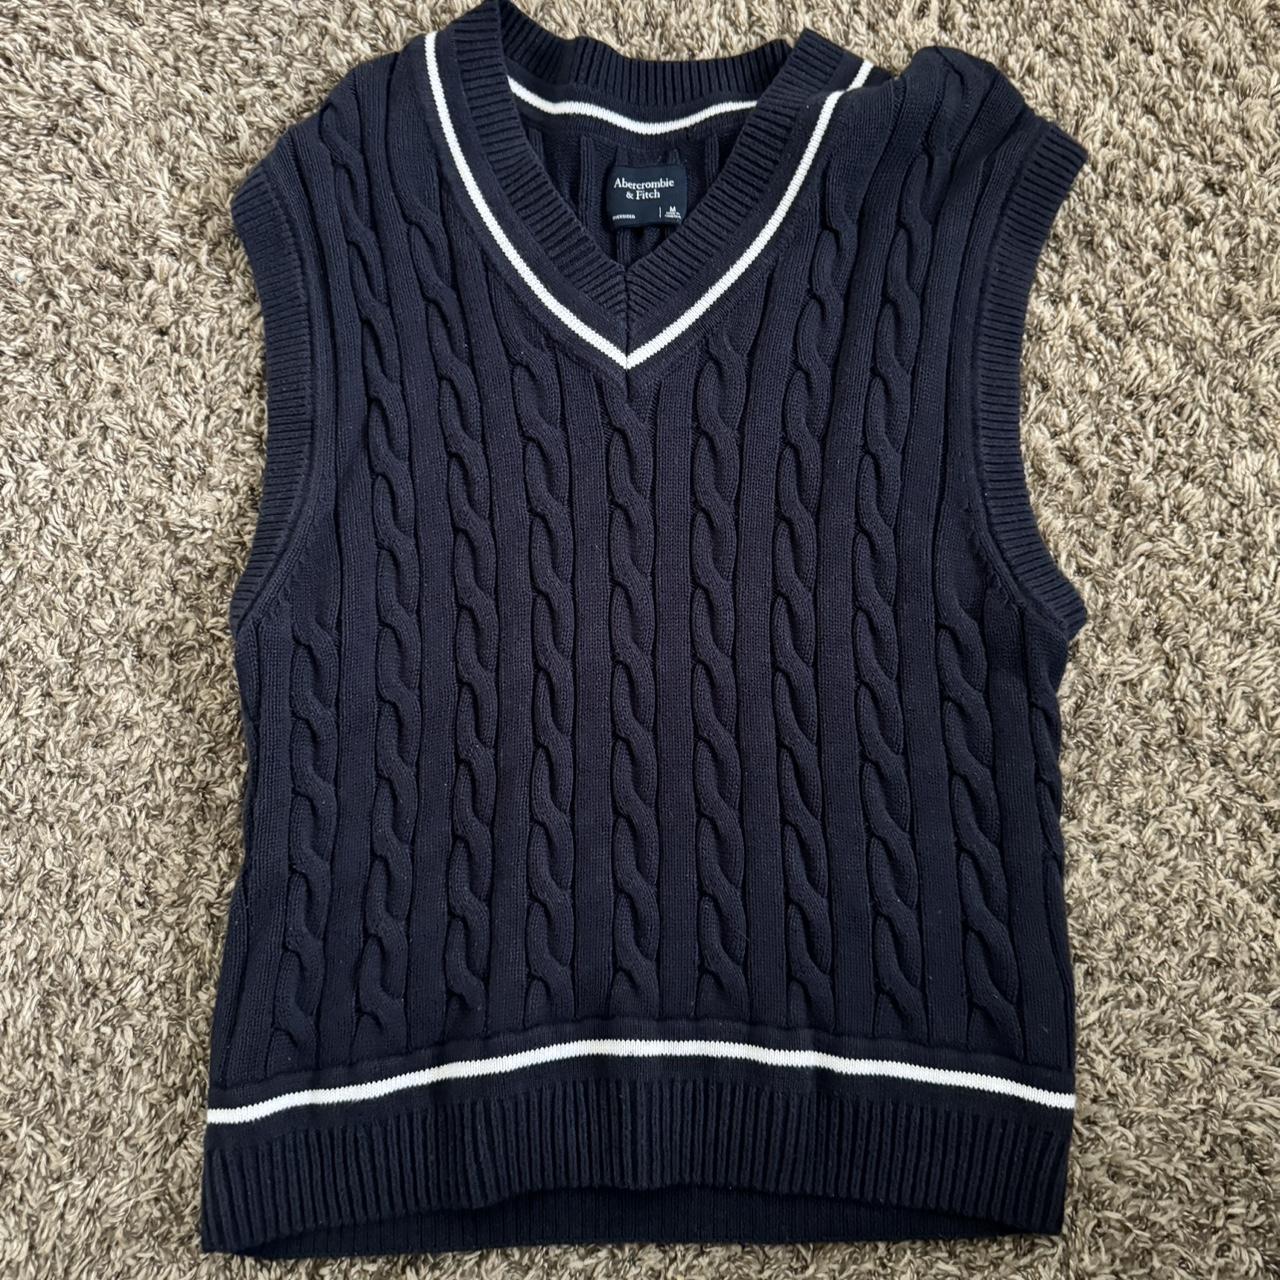 Abercrombie Knit sweater vest - Depop